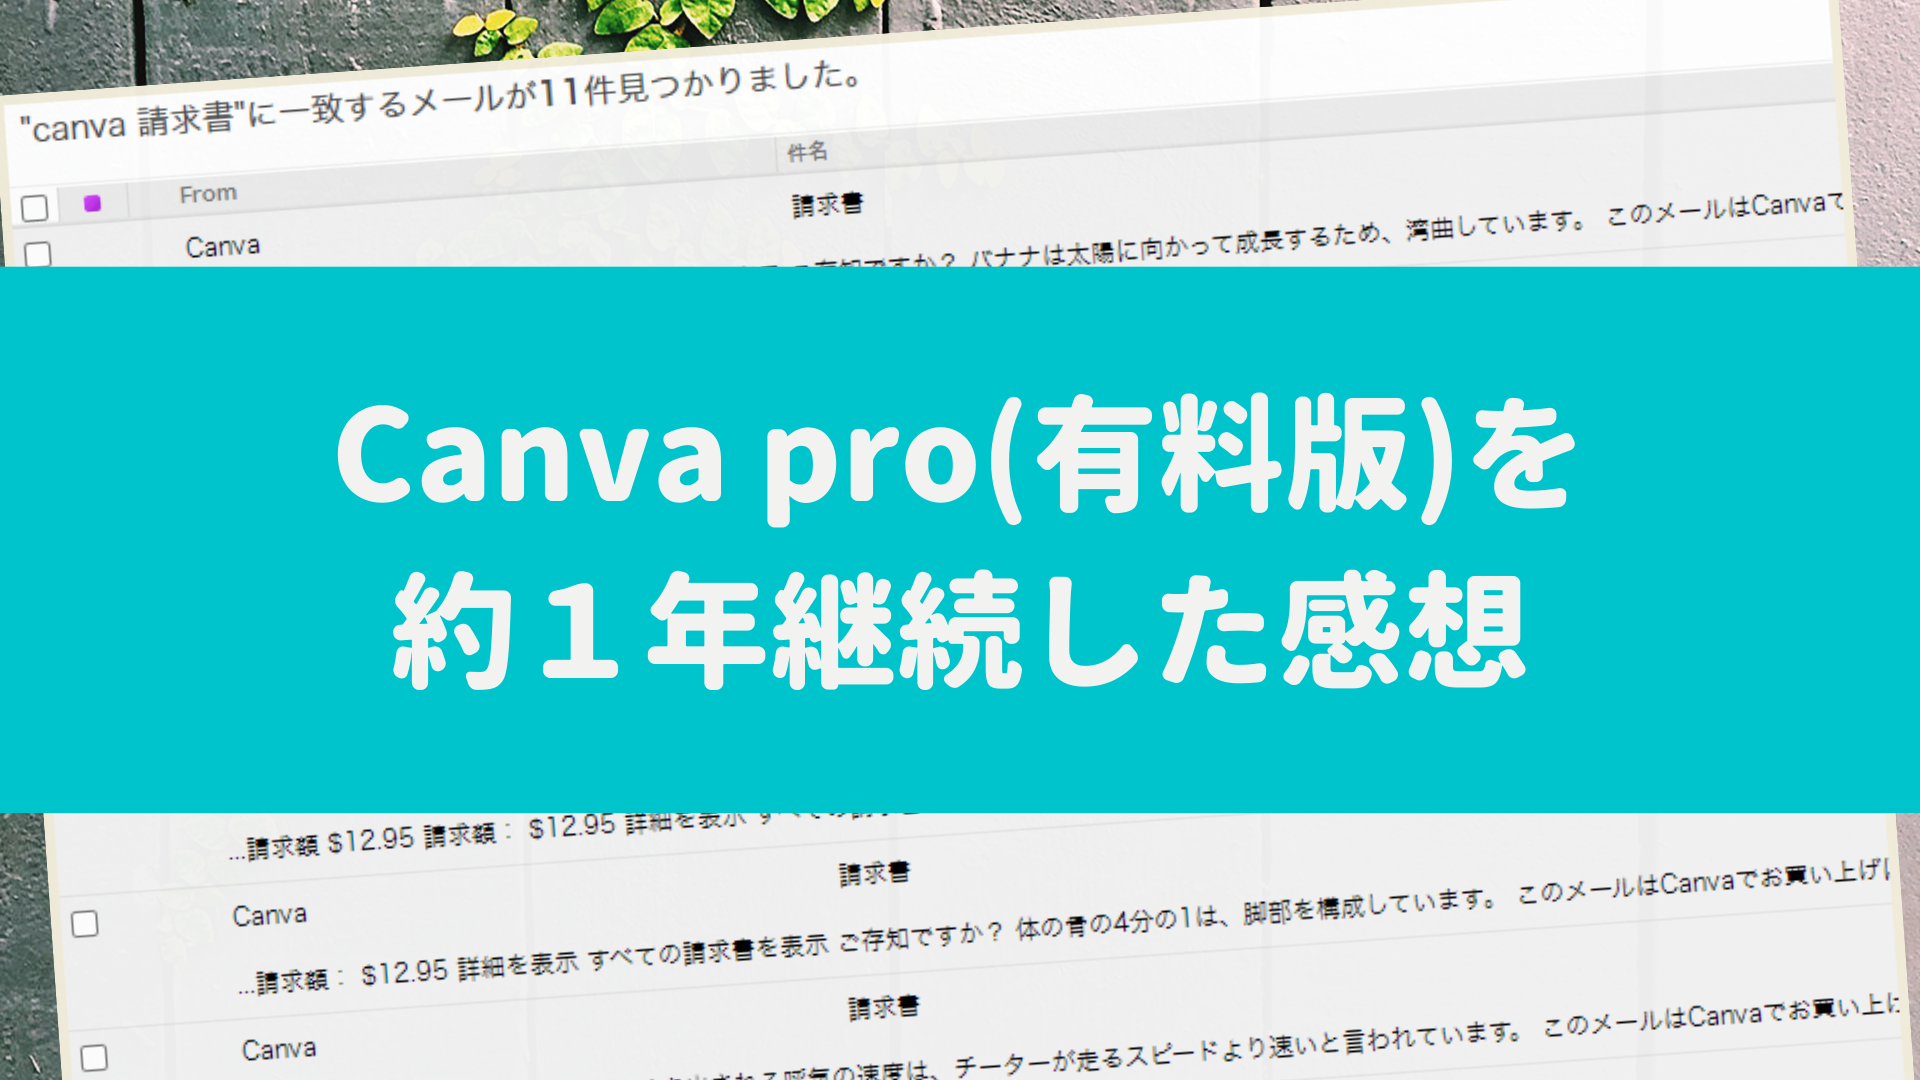 Canva pro(有料版)を 約１年継続した感想